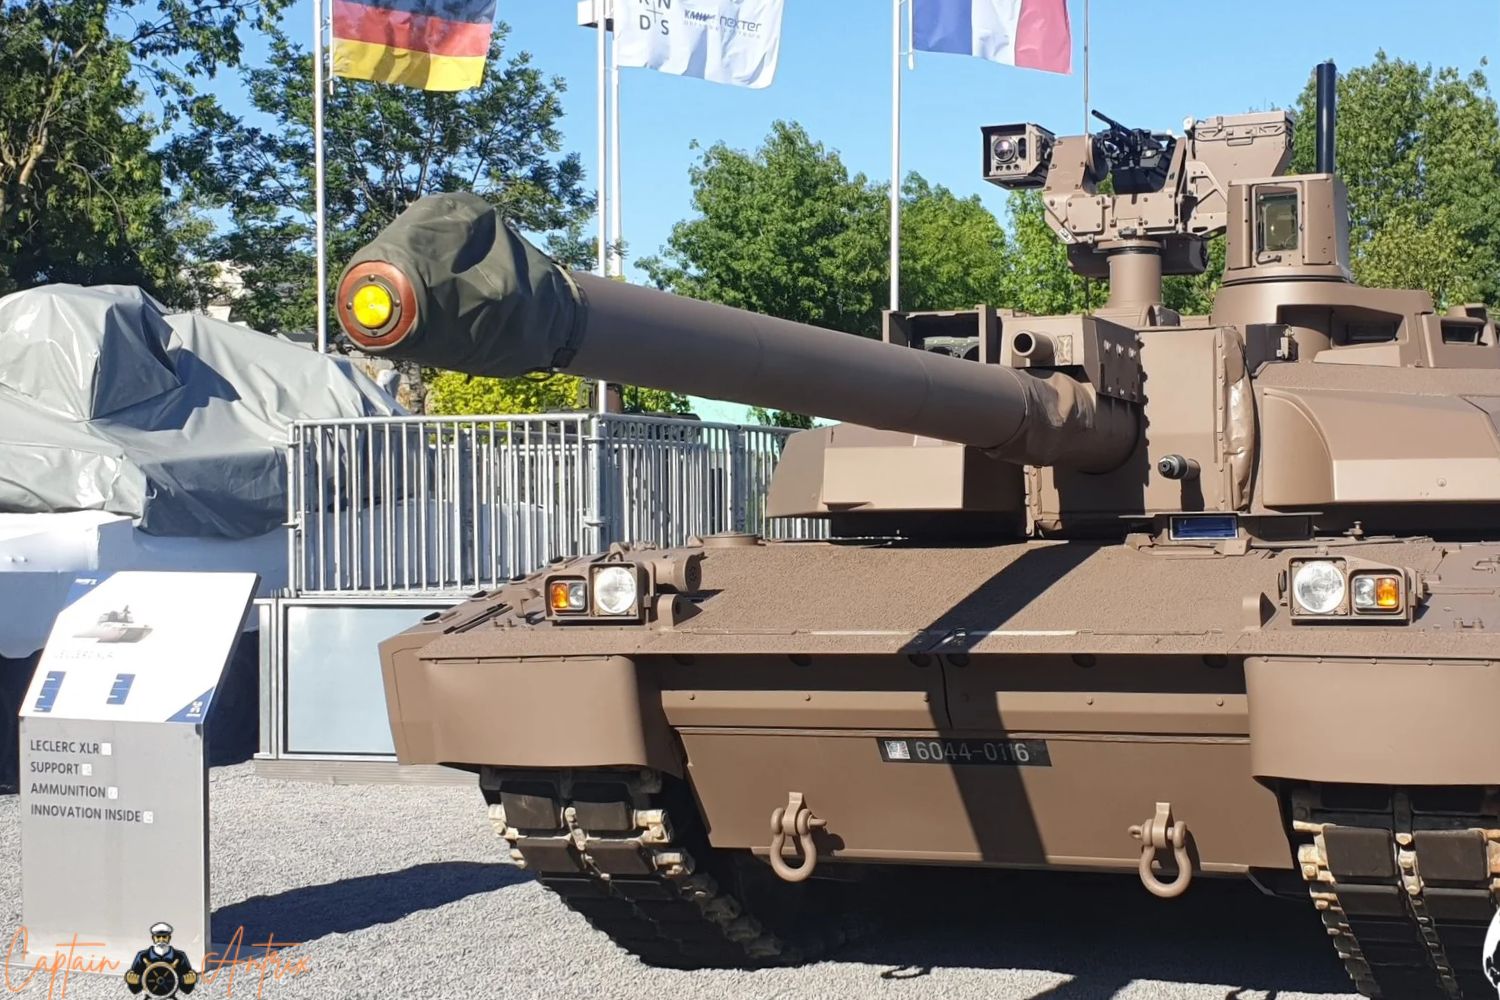 Revolutionizing Warfare: Inside the Epic Transformation of Leclerc Tank's Sights!